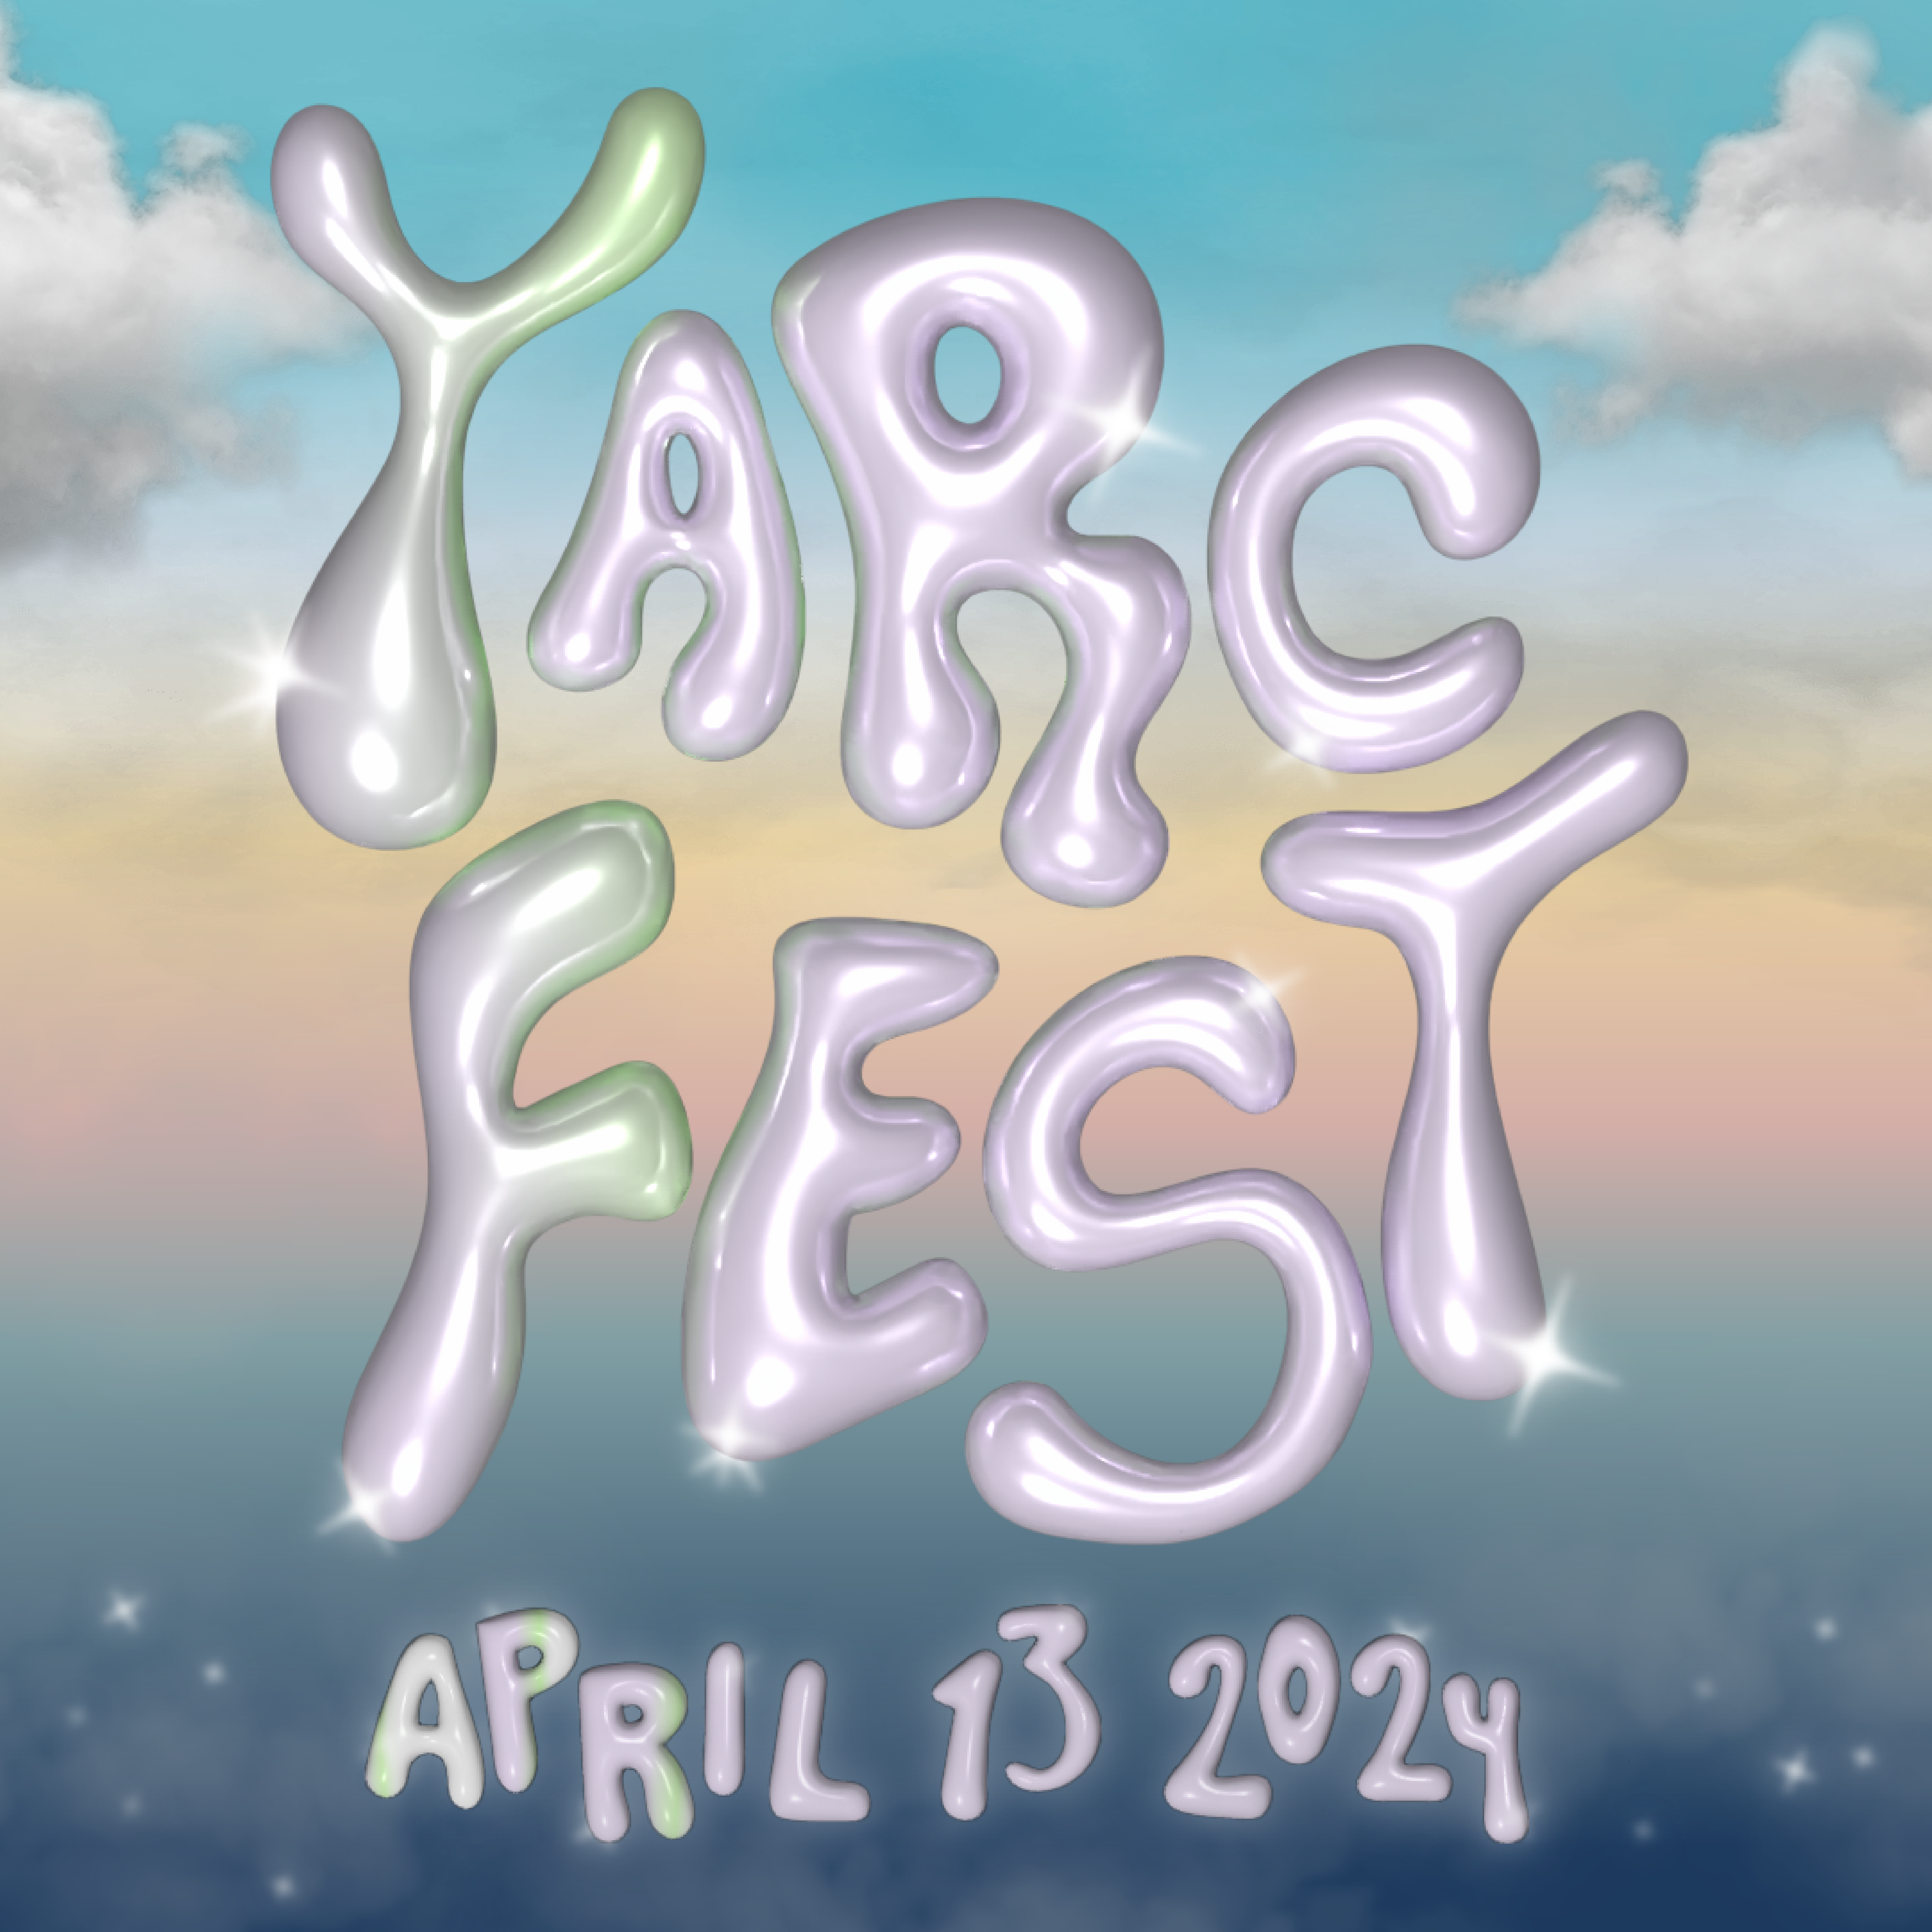 Promotional graphic for YARC Fest - April 13 2024